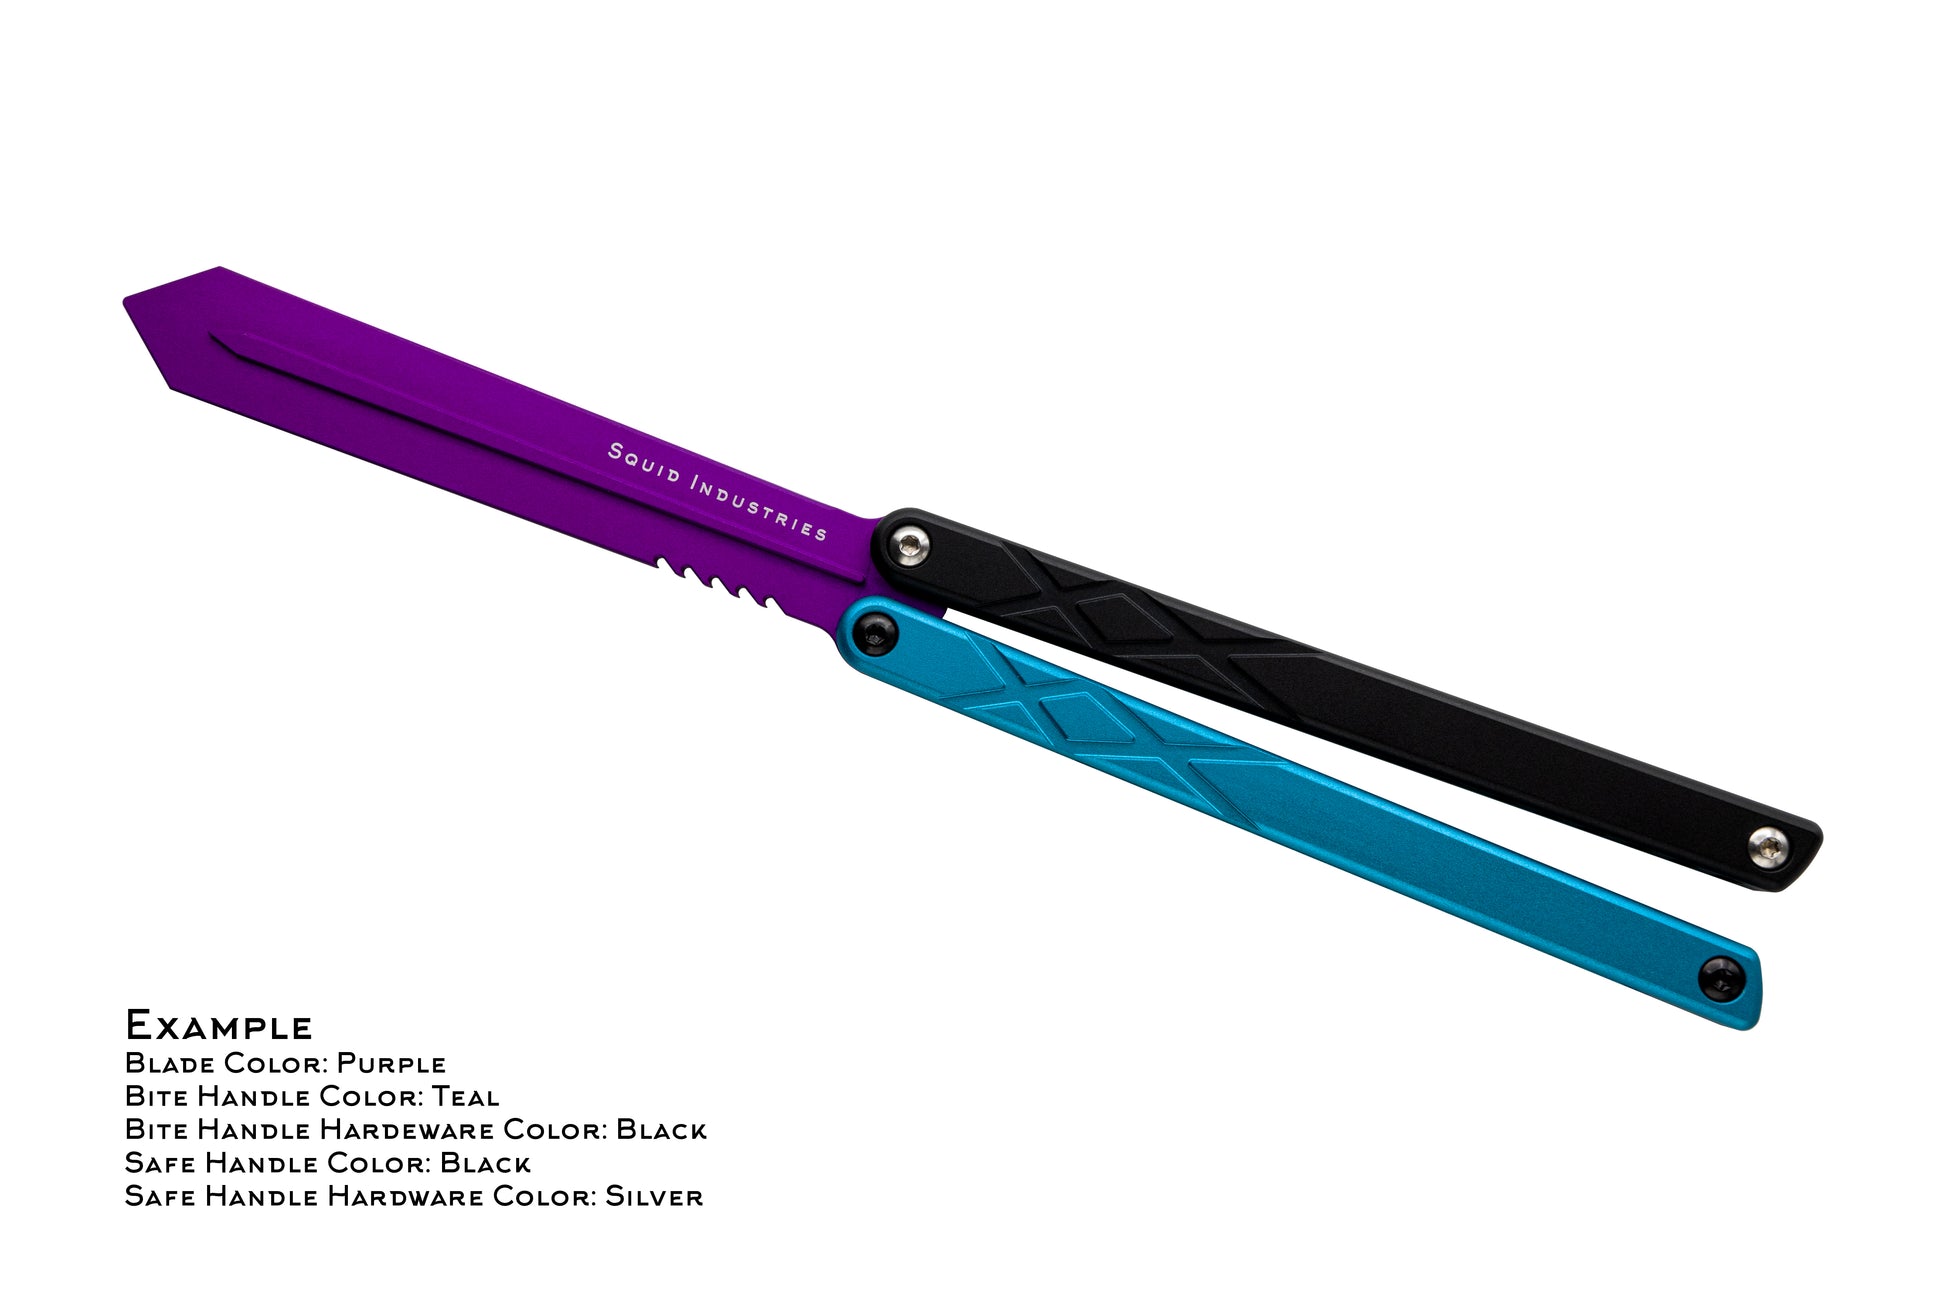 purple blade teal handle black handle black hardware silver hardware swordfish balisosng butterfly knife trainer fidget toy